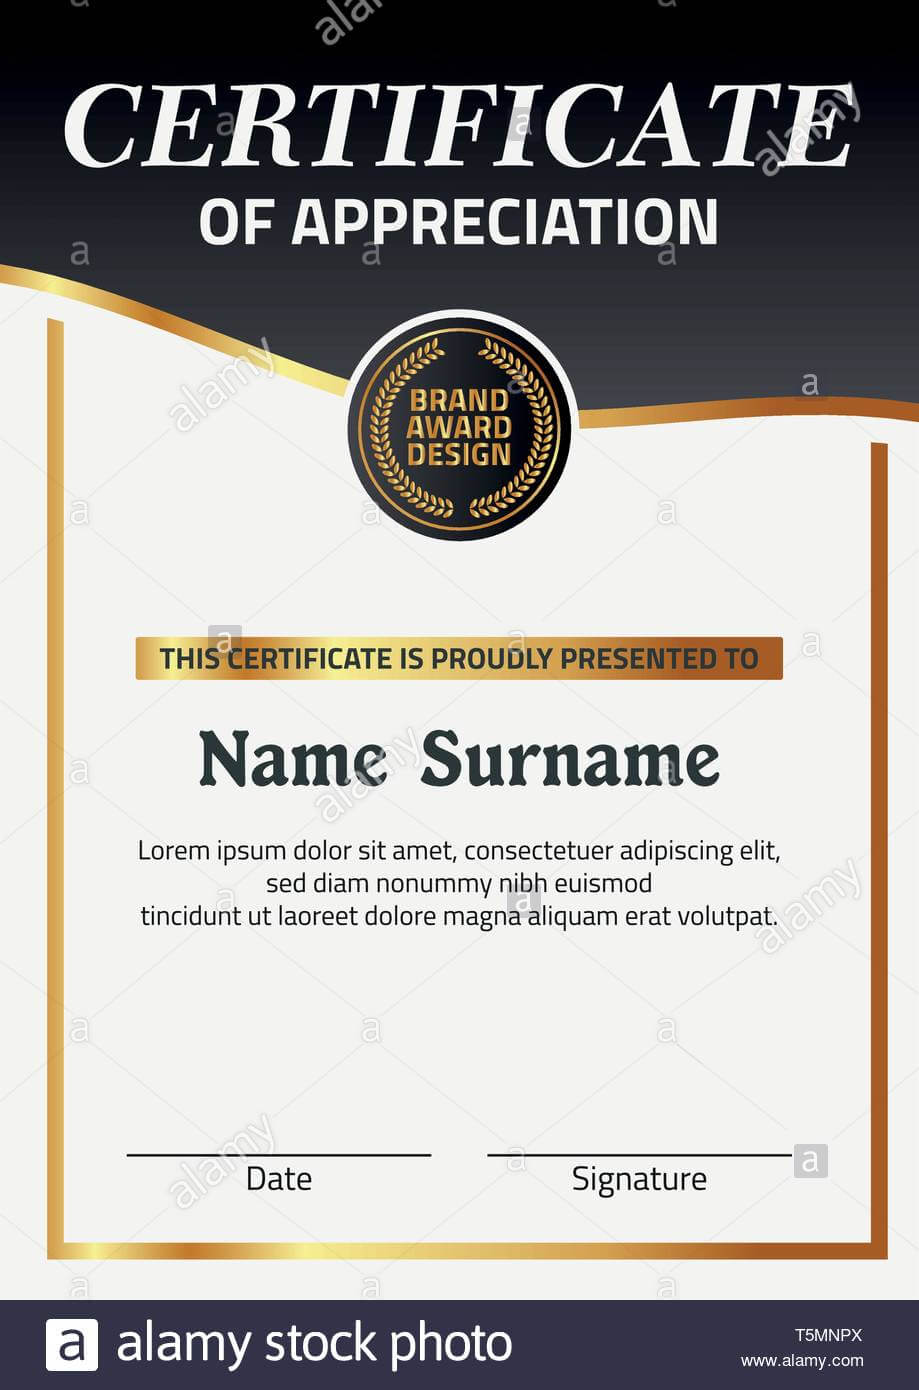 Vector Certificate Template. Illustration Certificate In A4 For Certificate Template Size